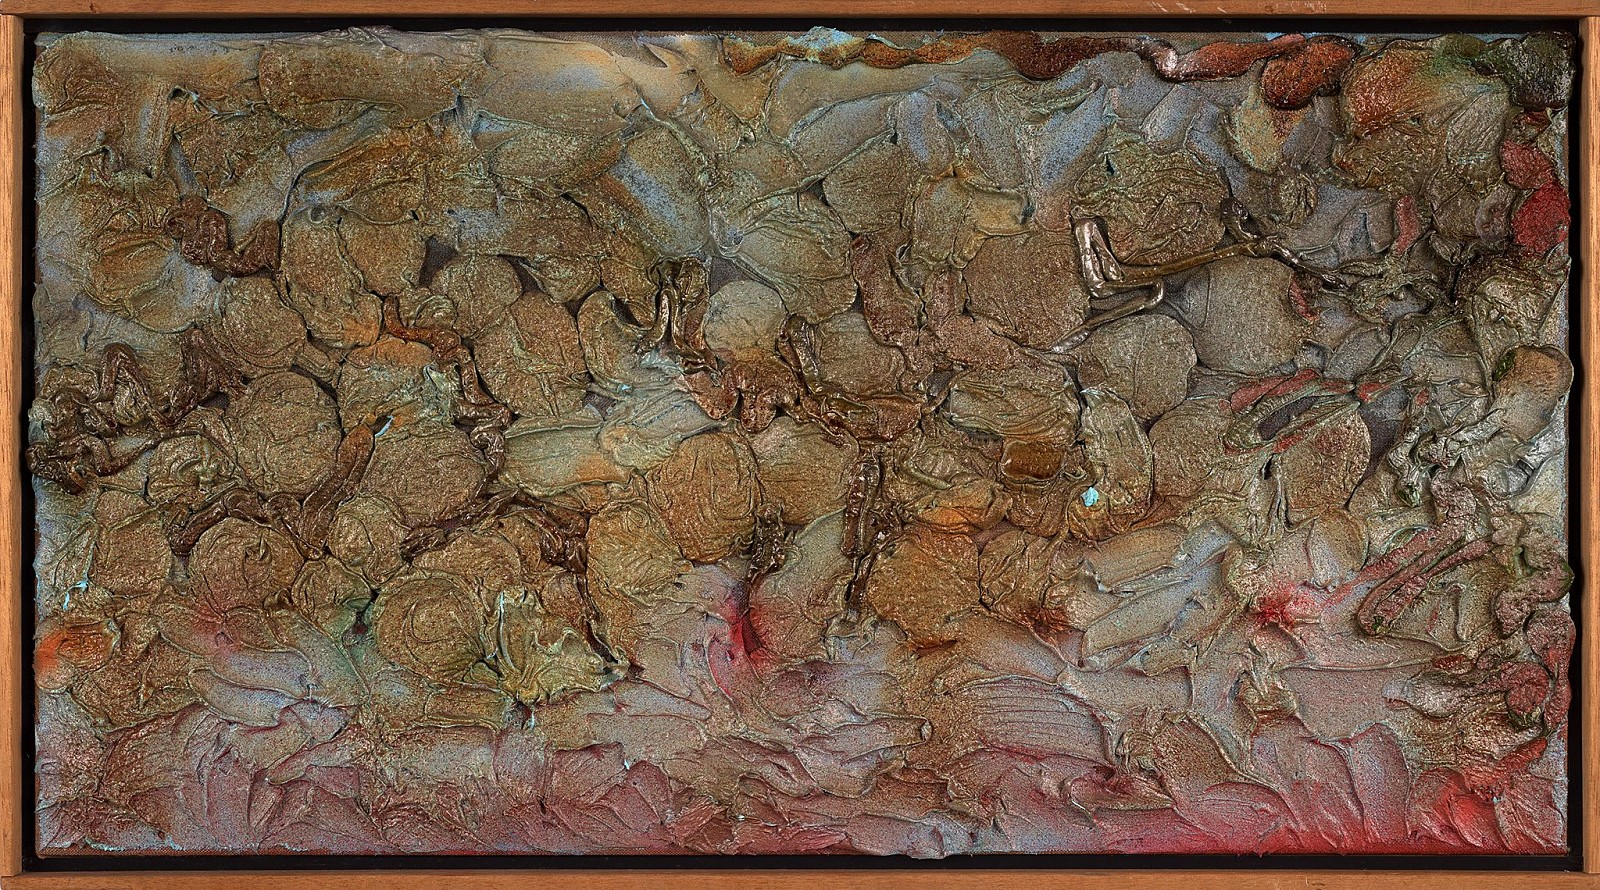 Stanley Boxer, Shimmereryquiver, 1983
Oil on linen, 14 x 26 in. (35.6 x 66 cm)
BOX-00072